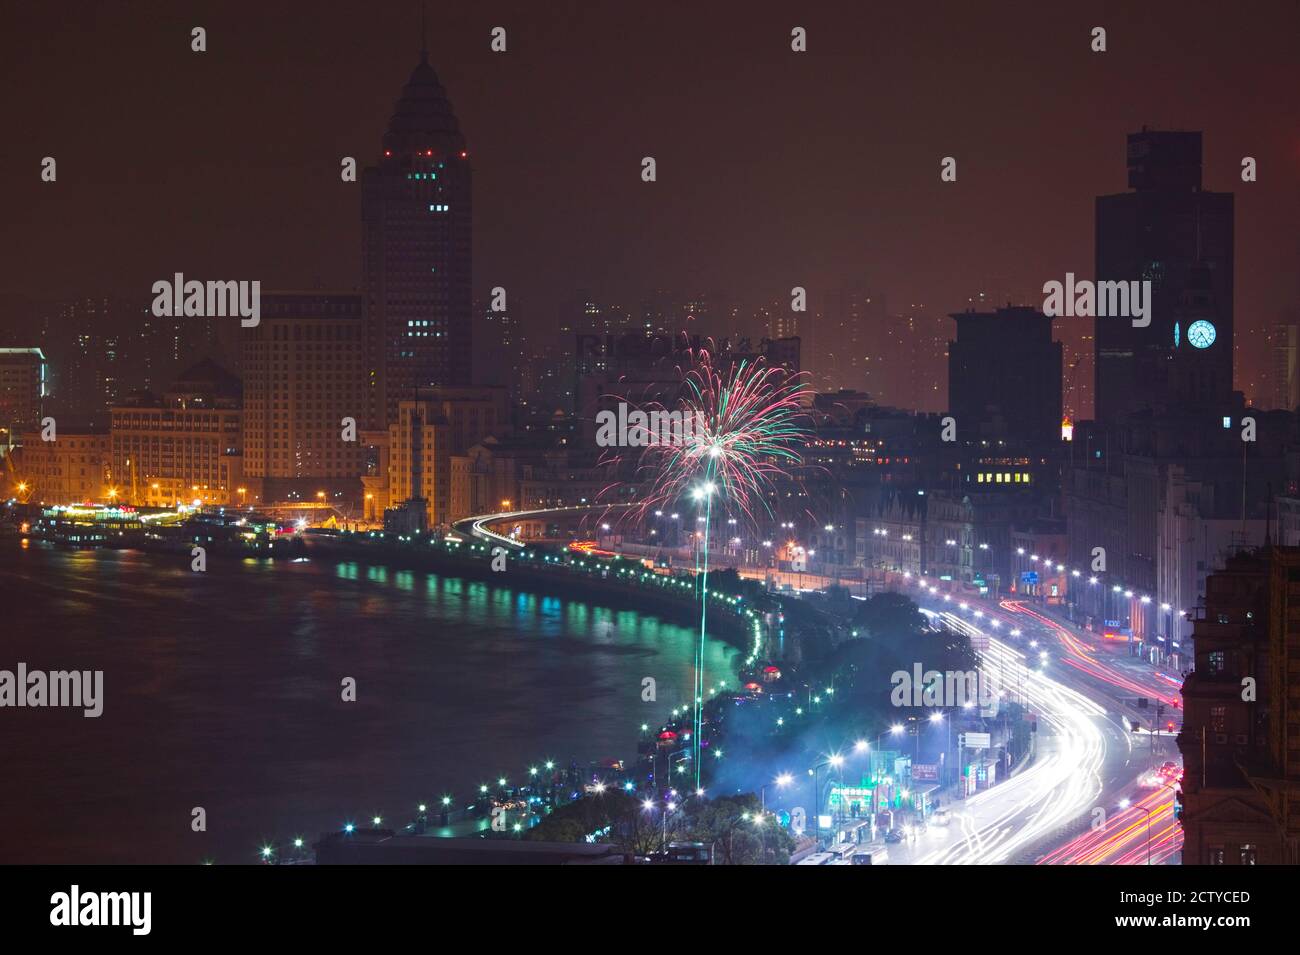 Fireworks display at dusk during Chinese New Year, The Bund, Shanghai, China Stock Photo